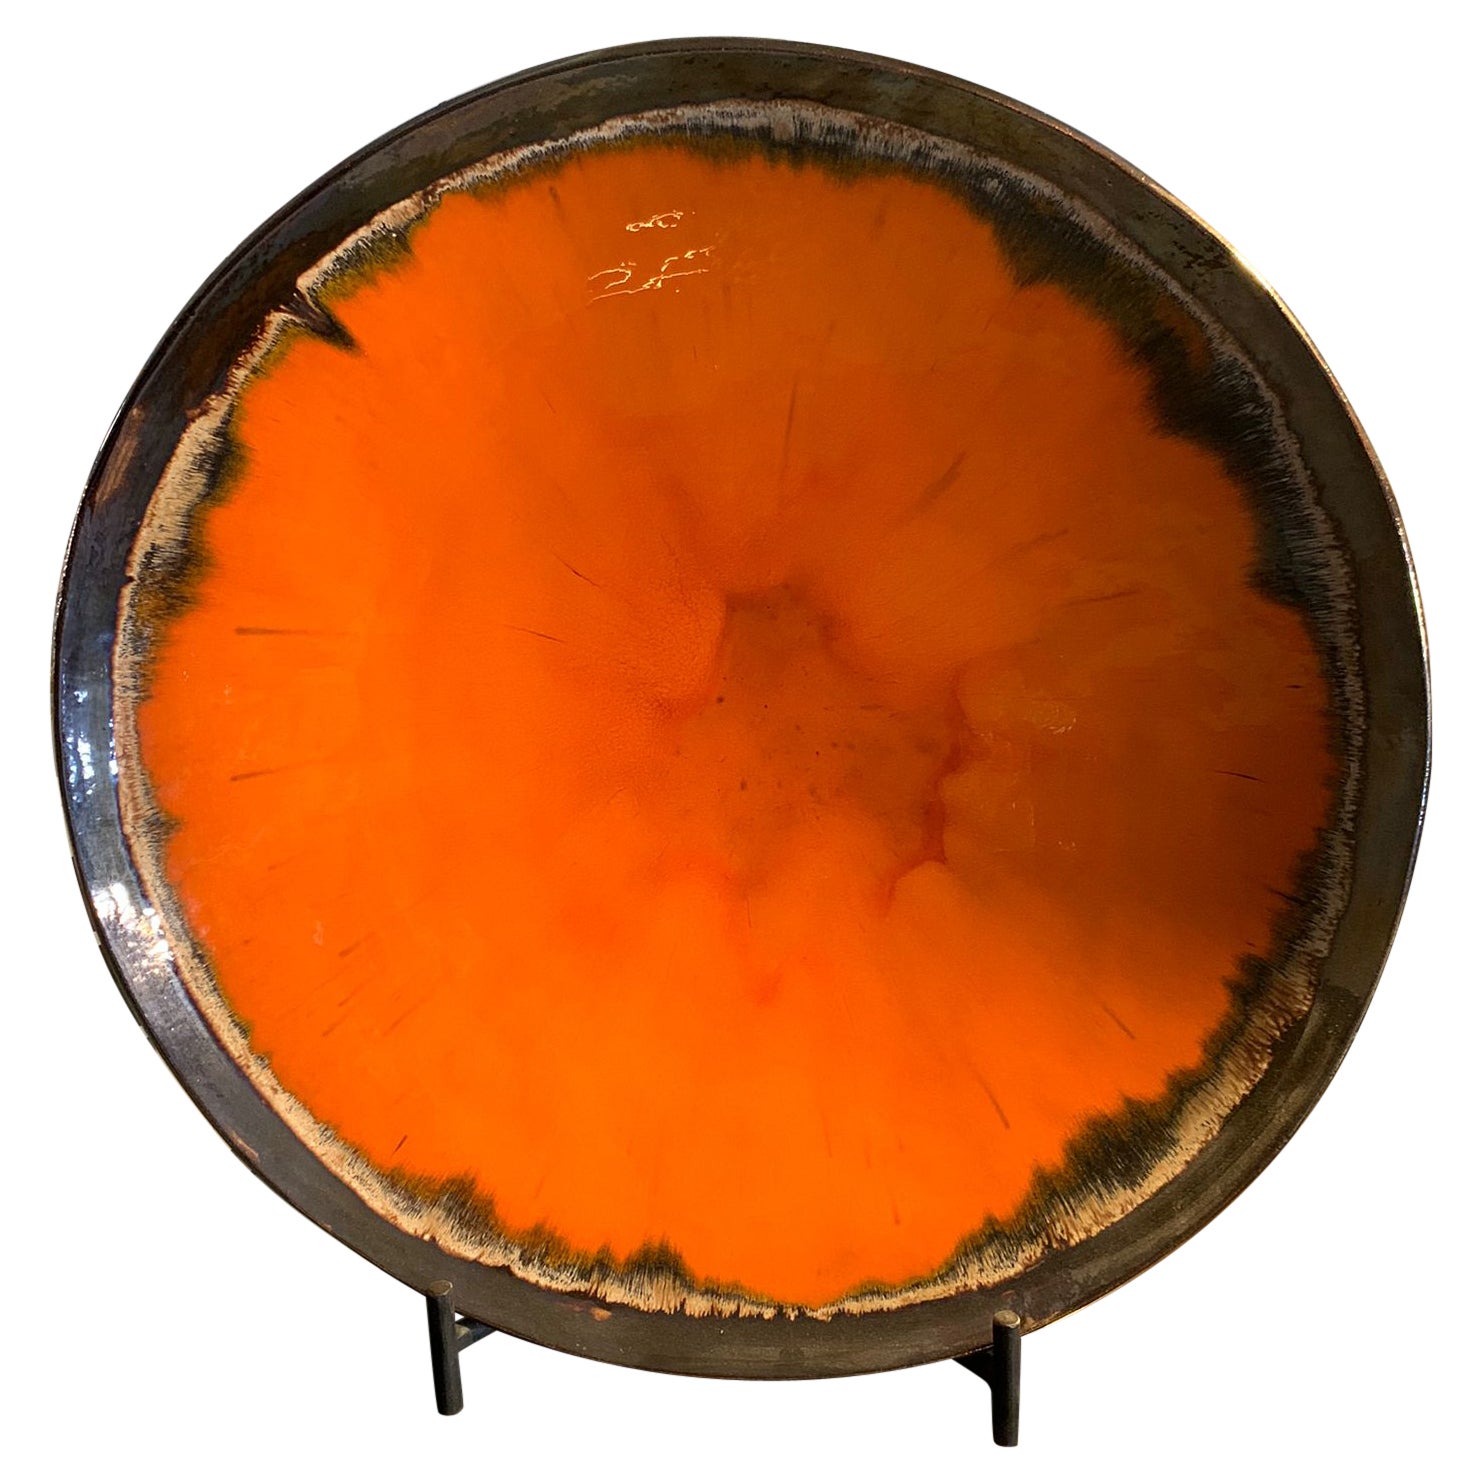 New Hand Made and Unique Ceramic Plate Orange Color 